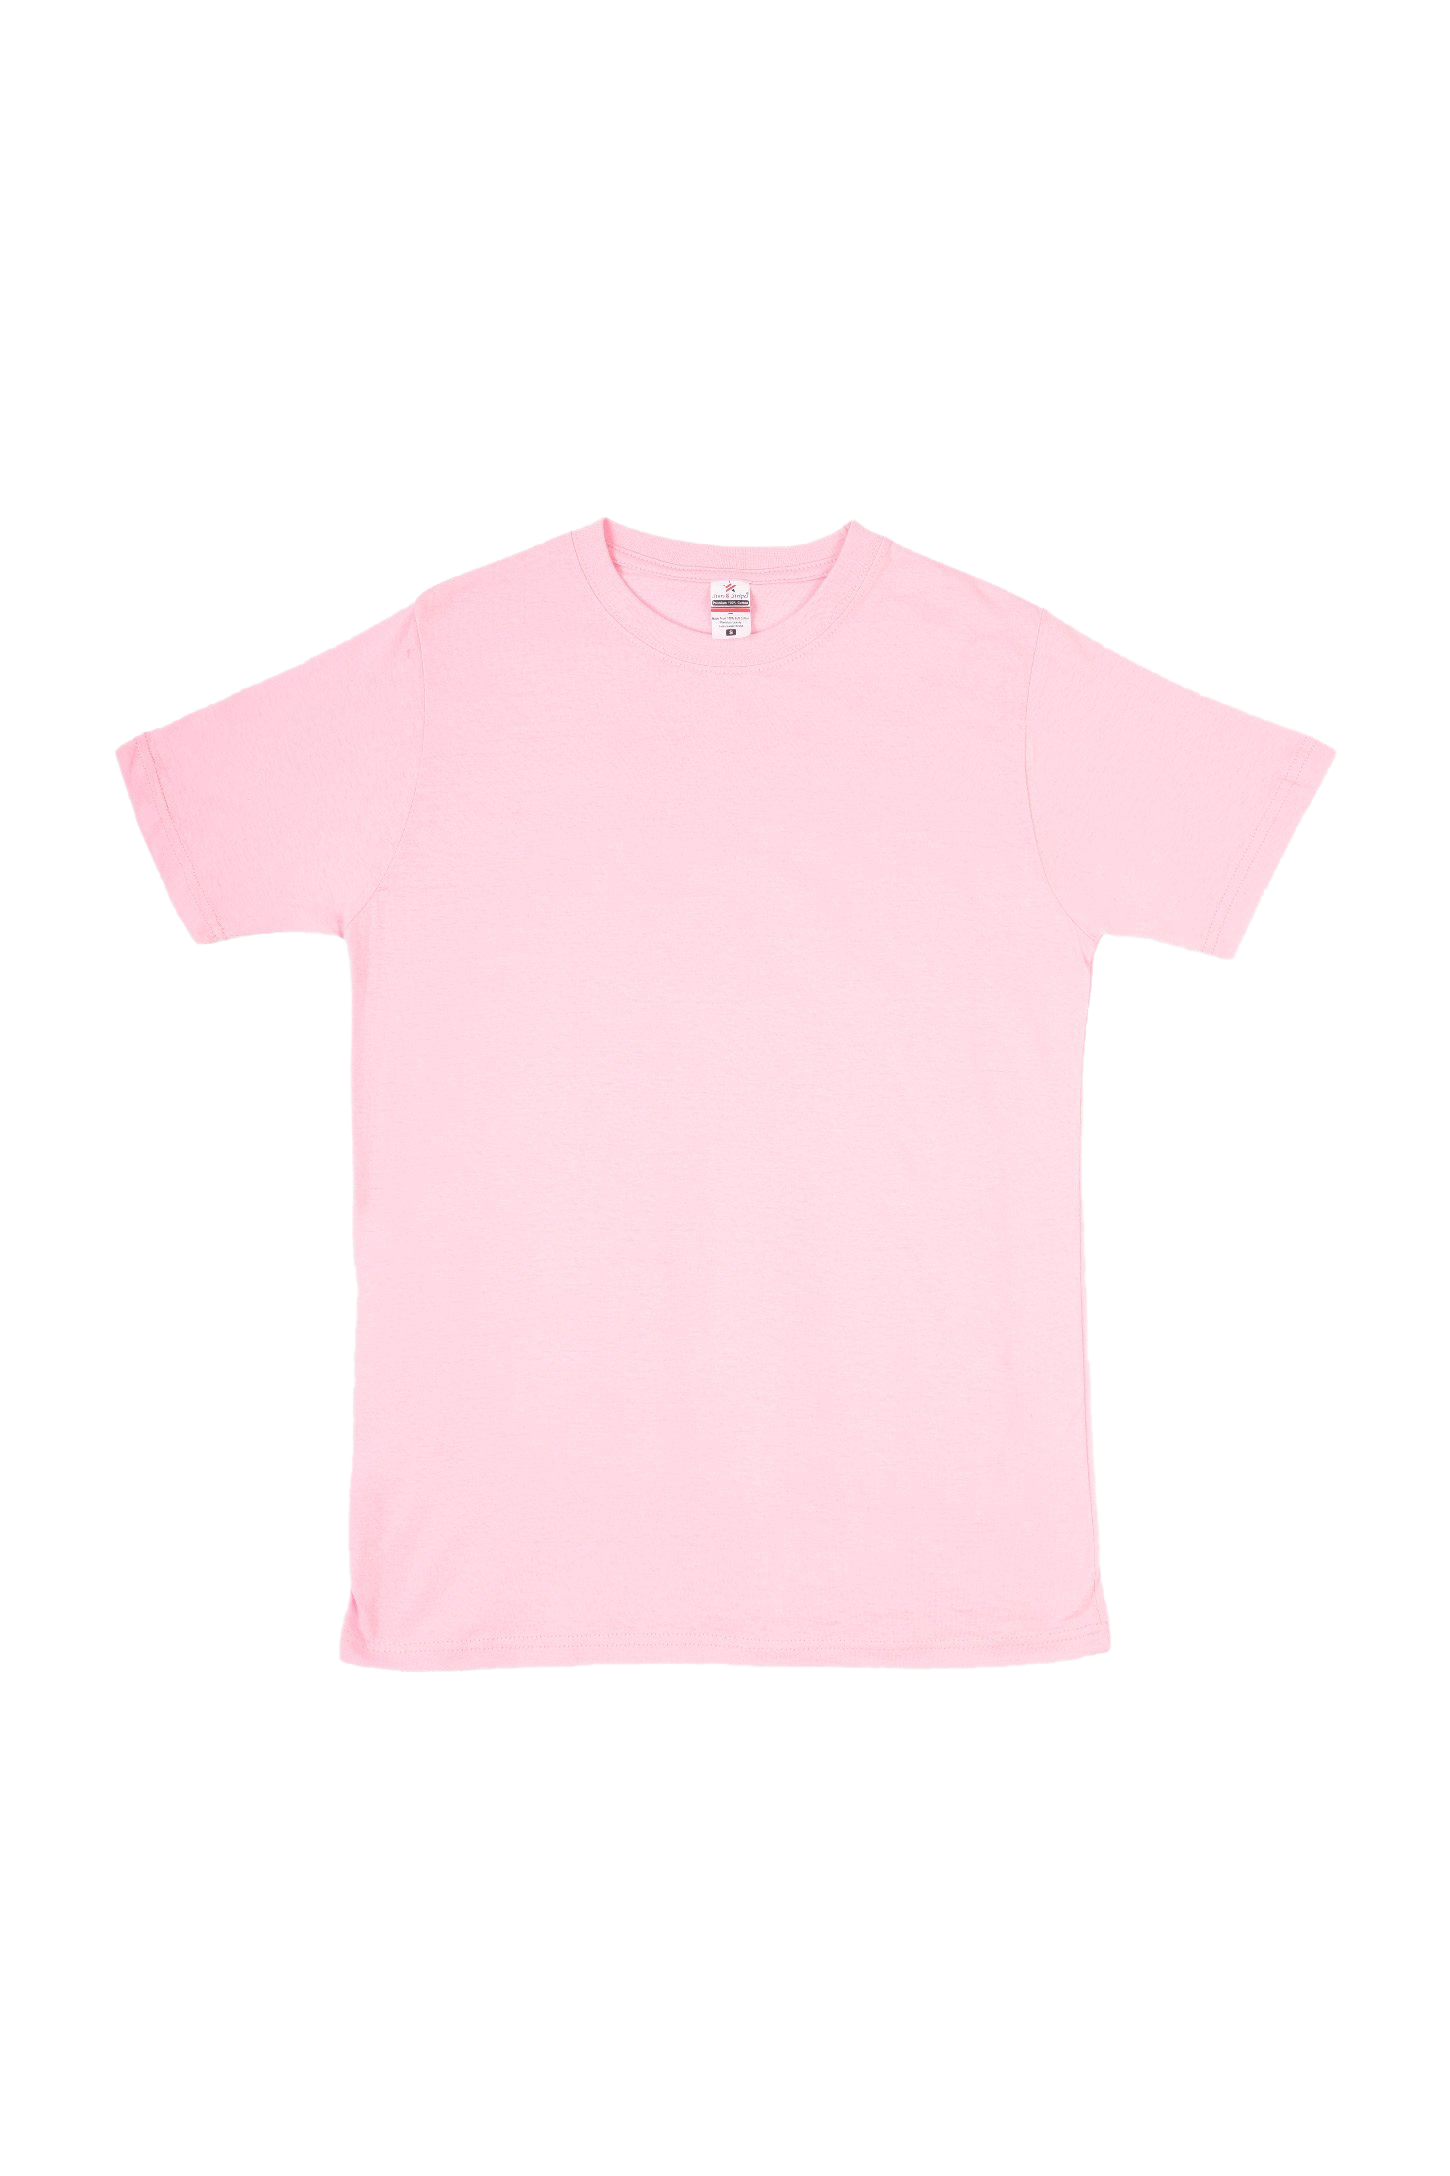 Pink pink t-shirt PNG Gambar berkualitas tinggi